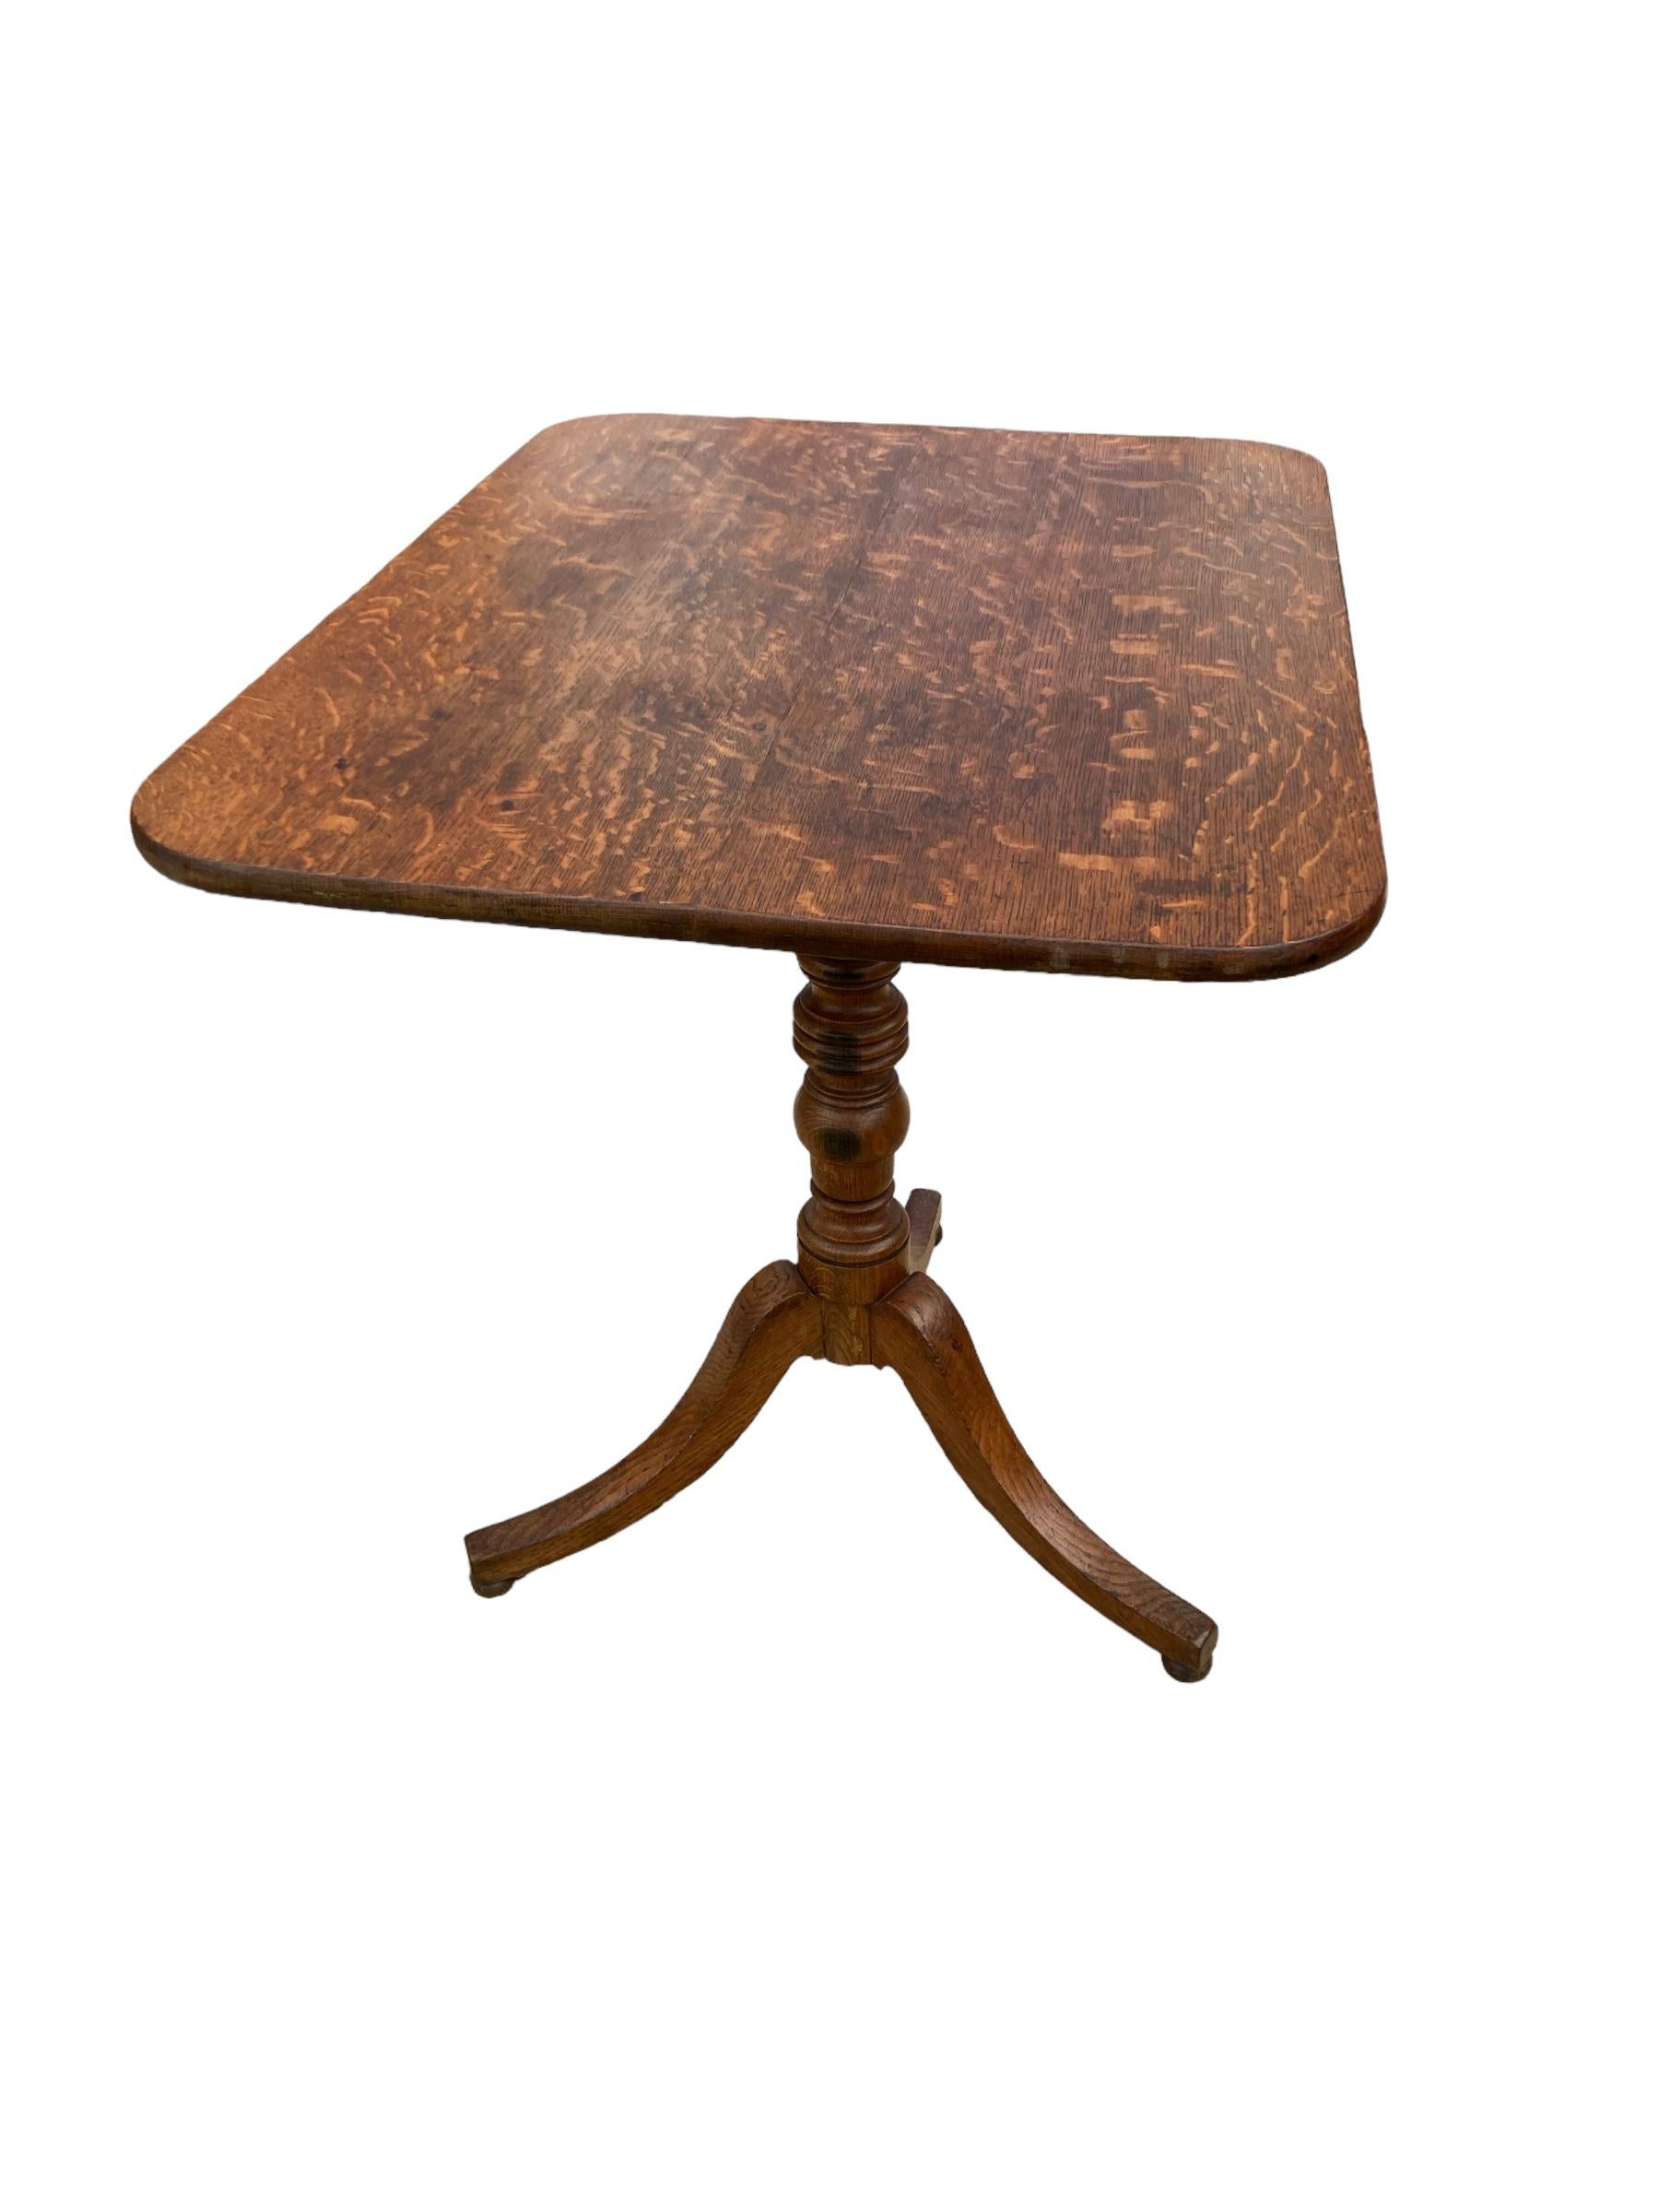 Early Victorian 19th Century English Oak Rectangular Tri Legged Tilt top table For Sale